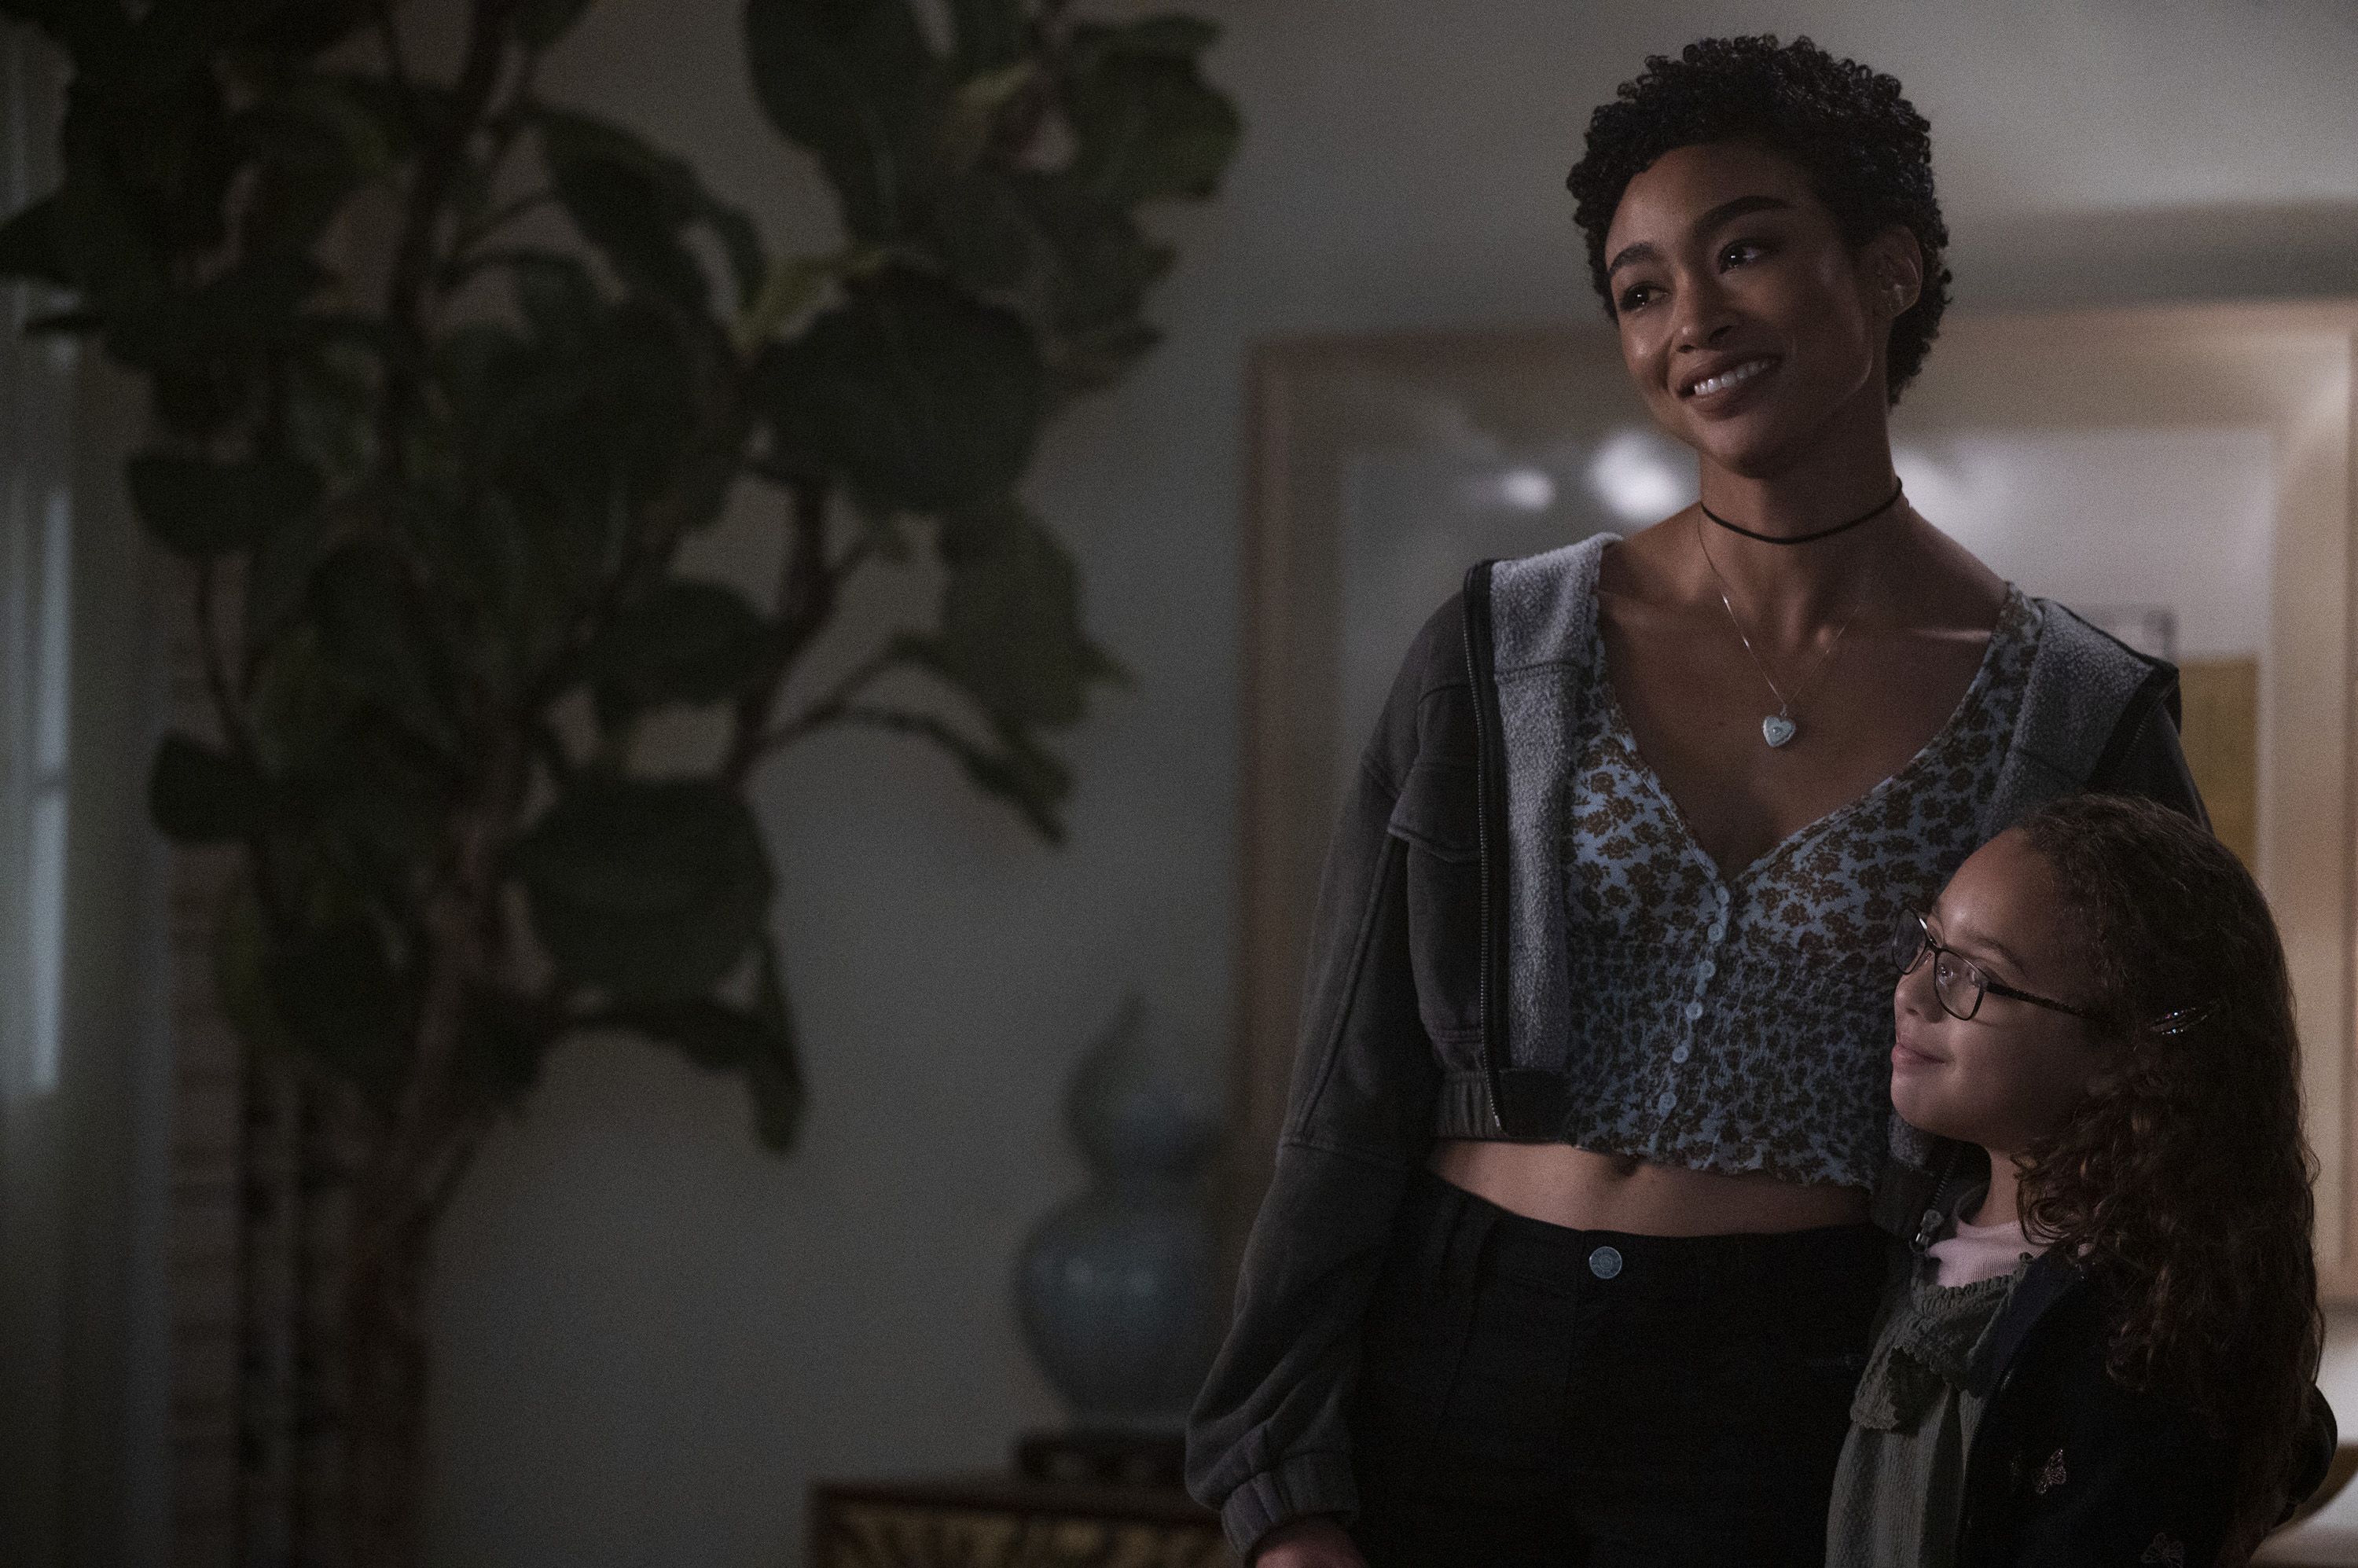 Meet Tati Gabrielle, the New Star of 'You' Season 3 on Netflix